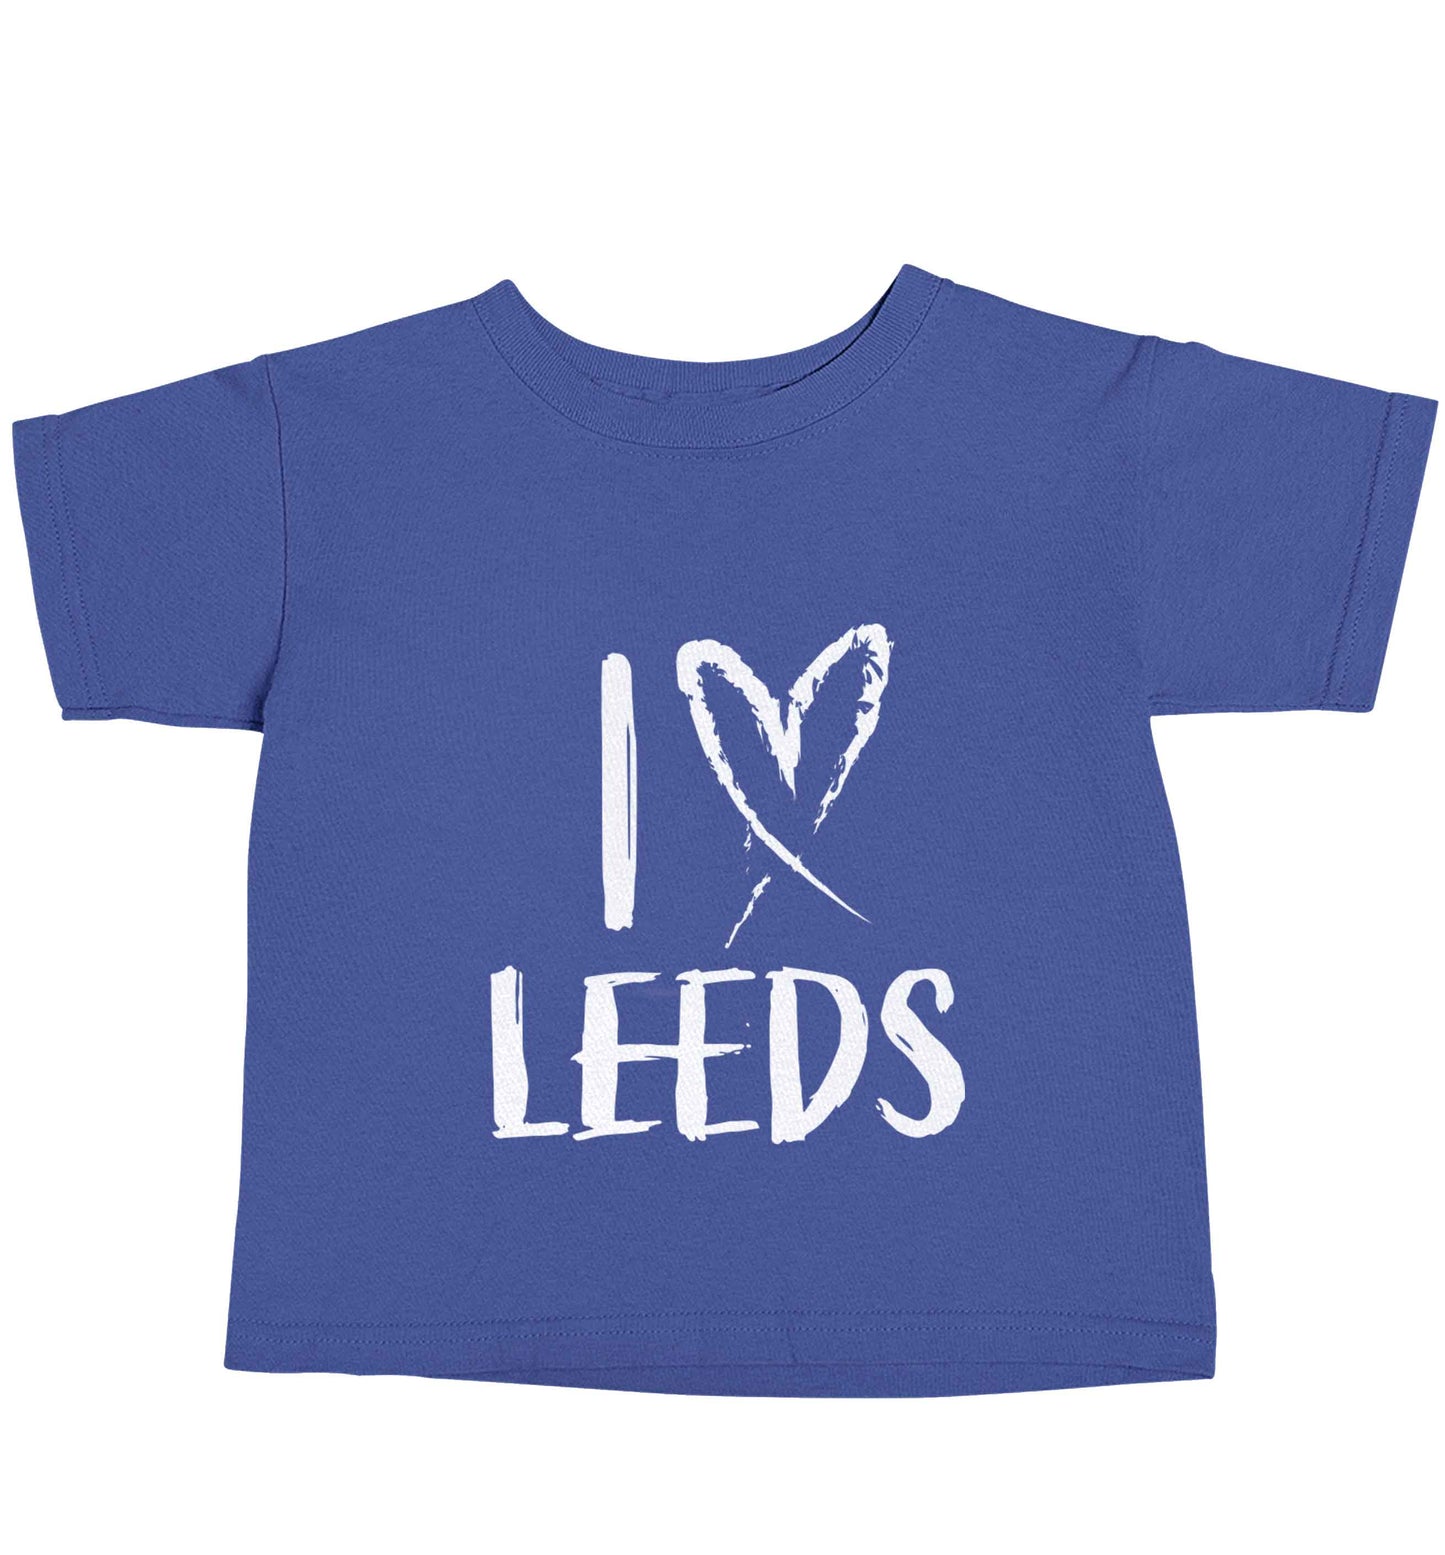 I love Leeds blue baby toddler Tshirt 2 Years